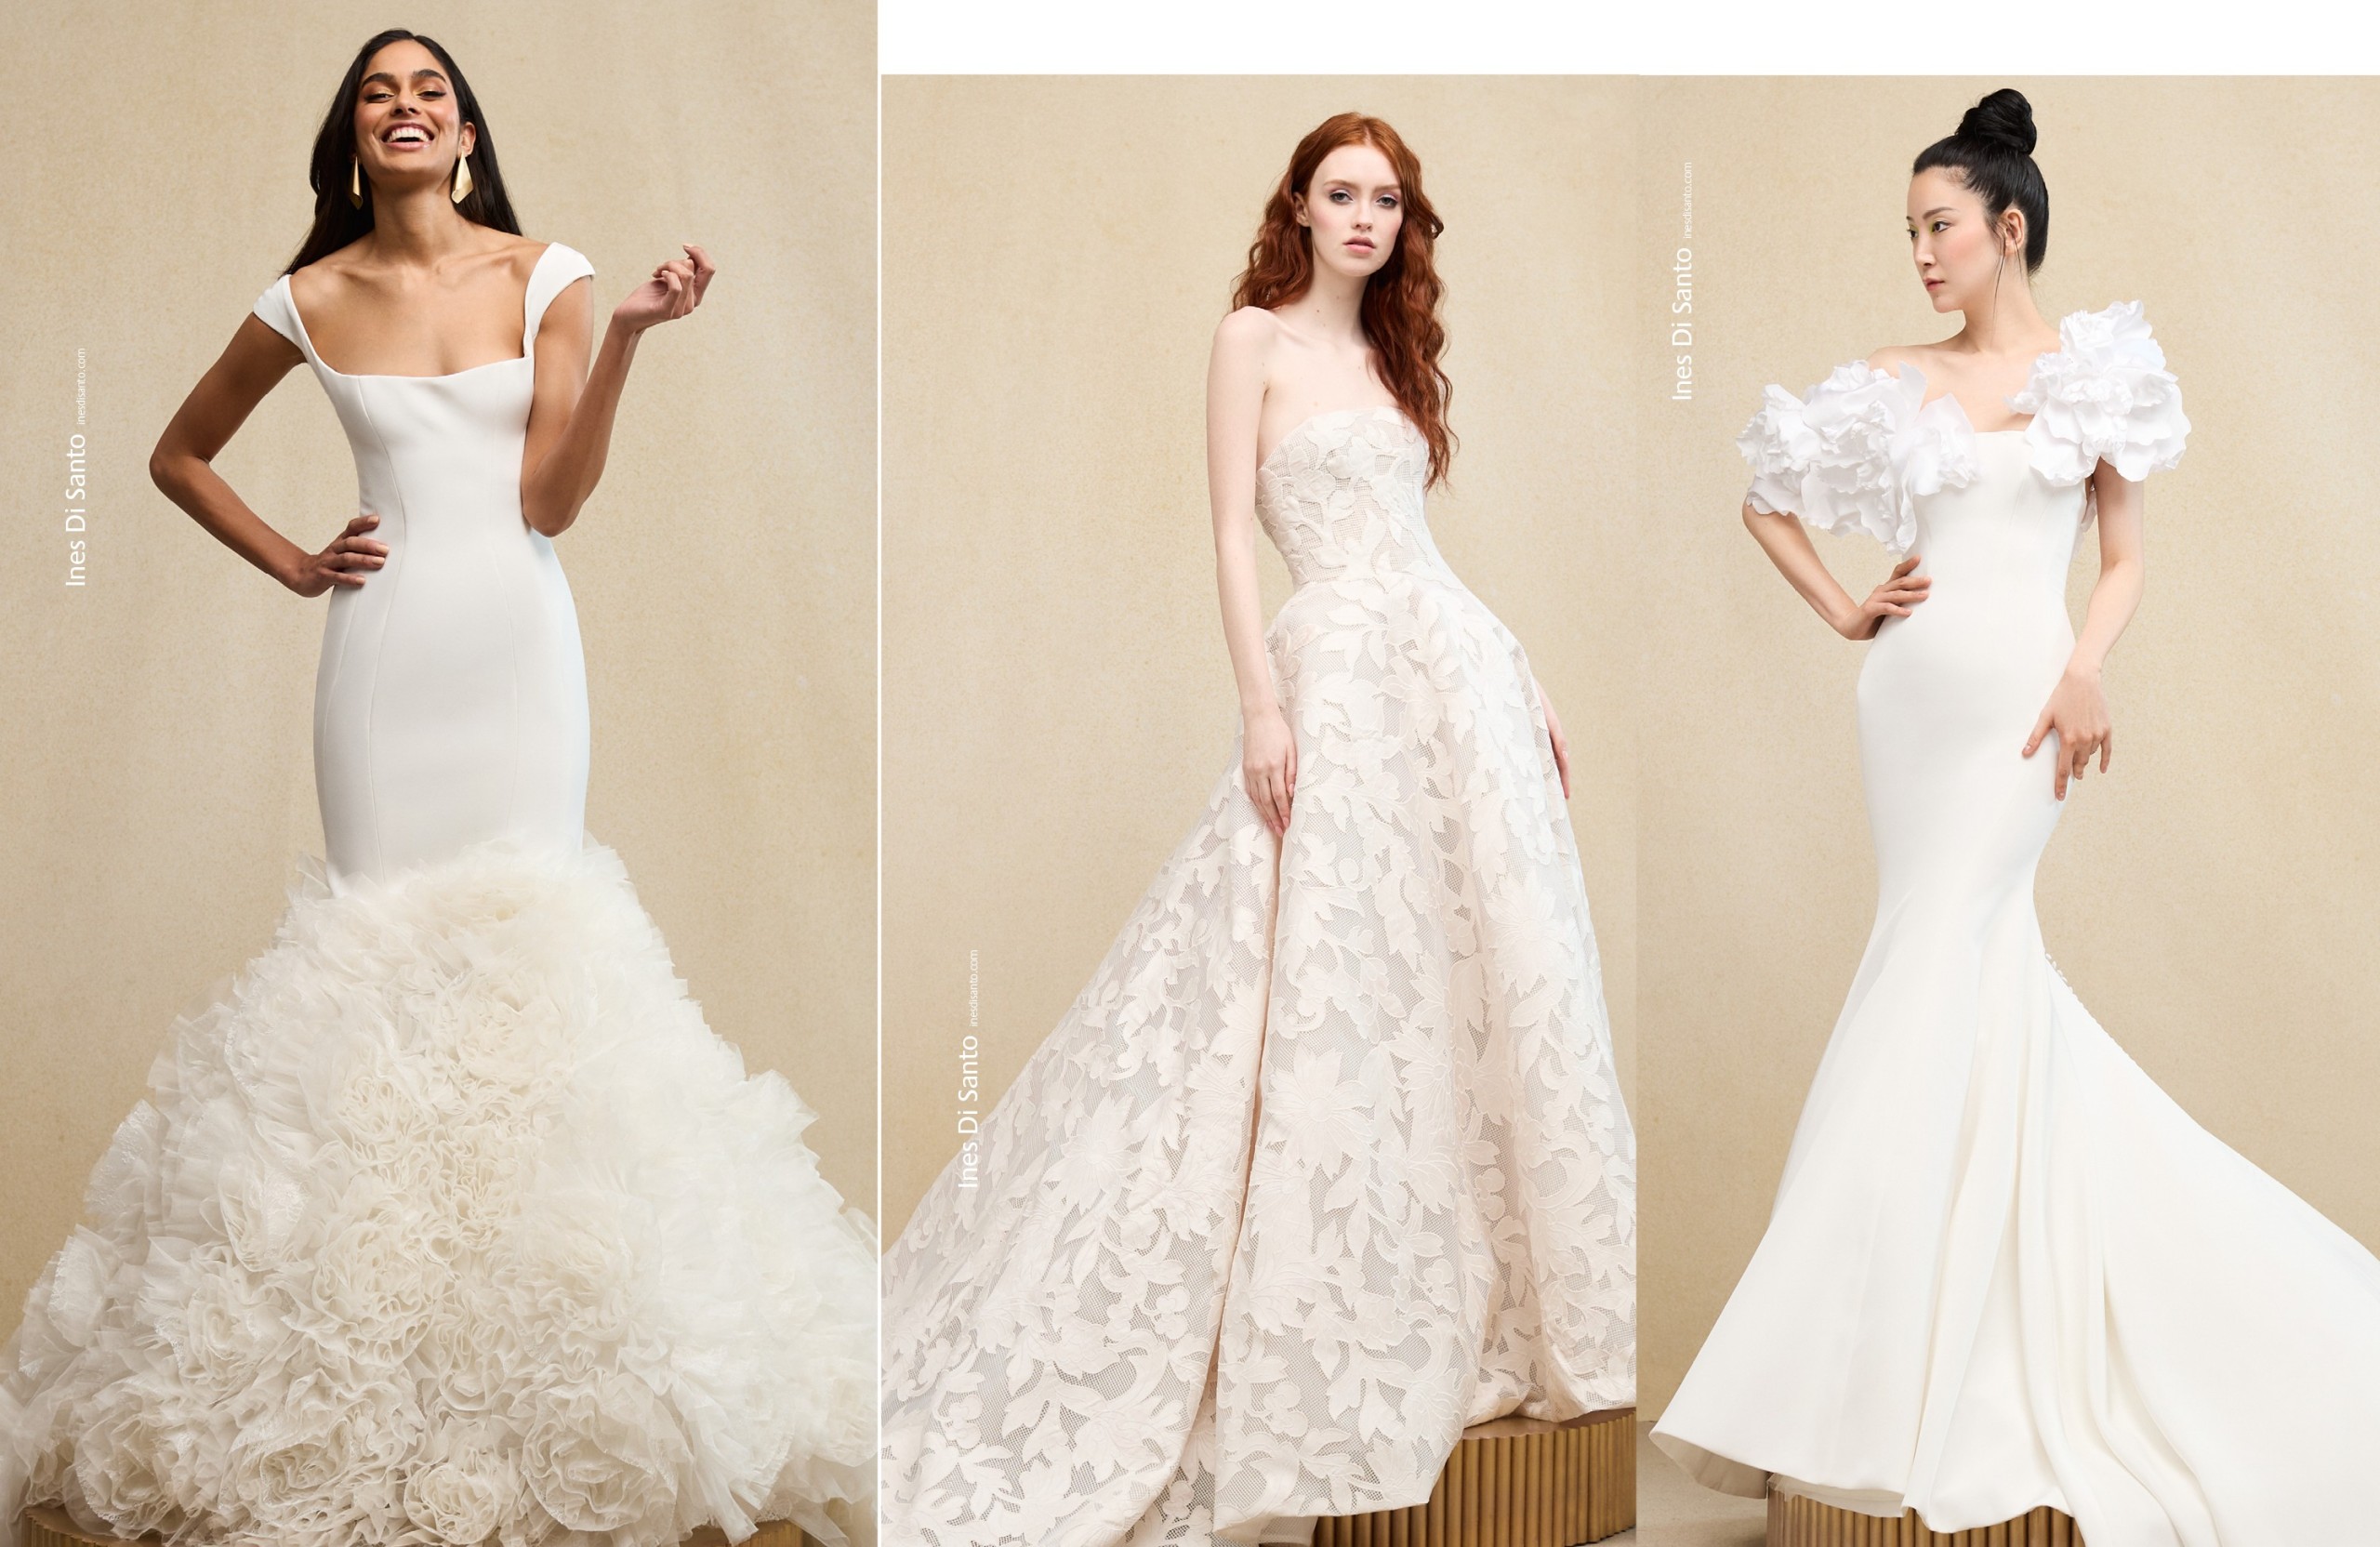 The Bride Wedding Gown Textures | Daz 3D